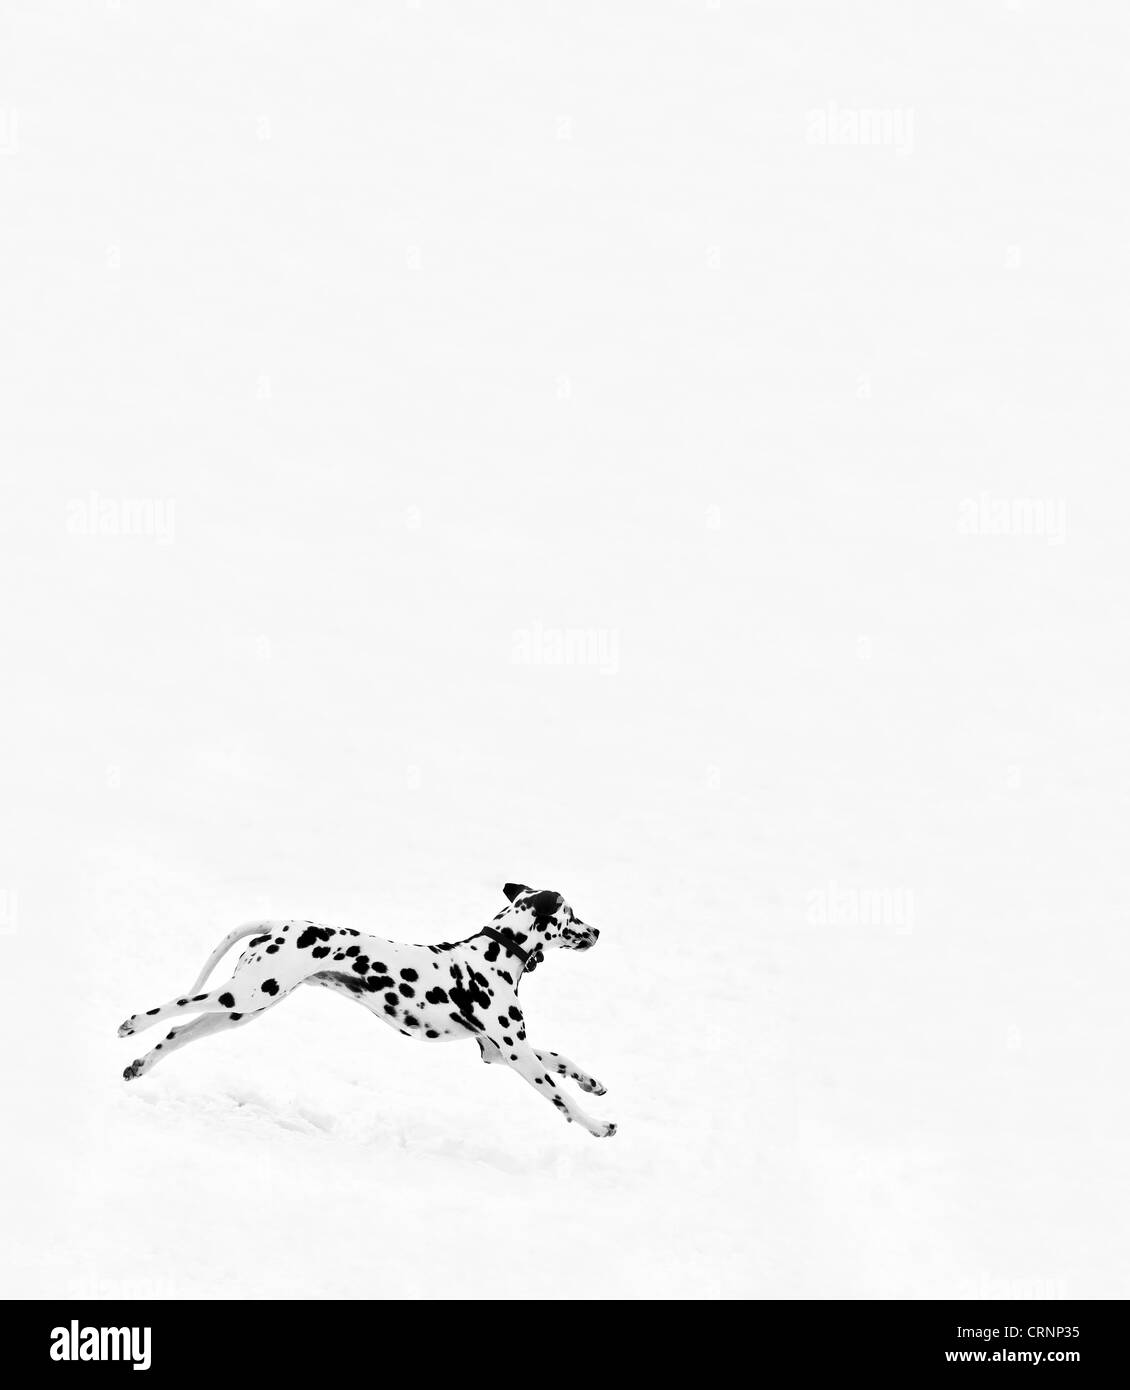 A Dalmatian dog running over snow. Stock Photo